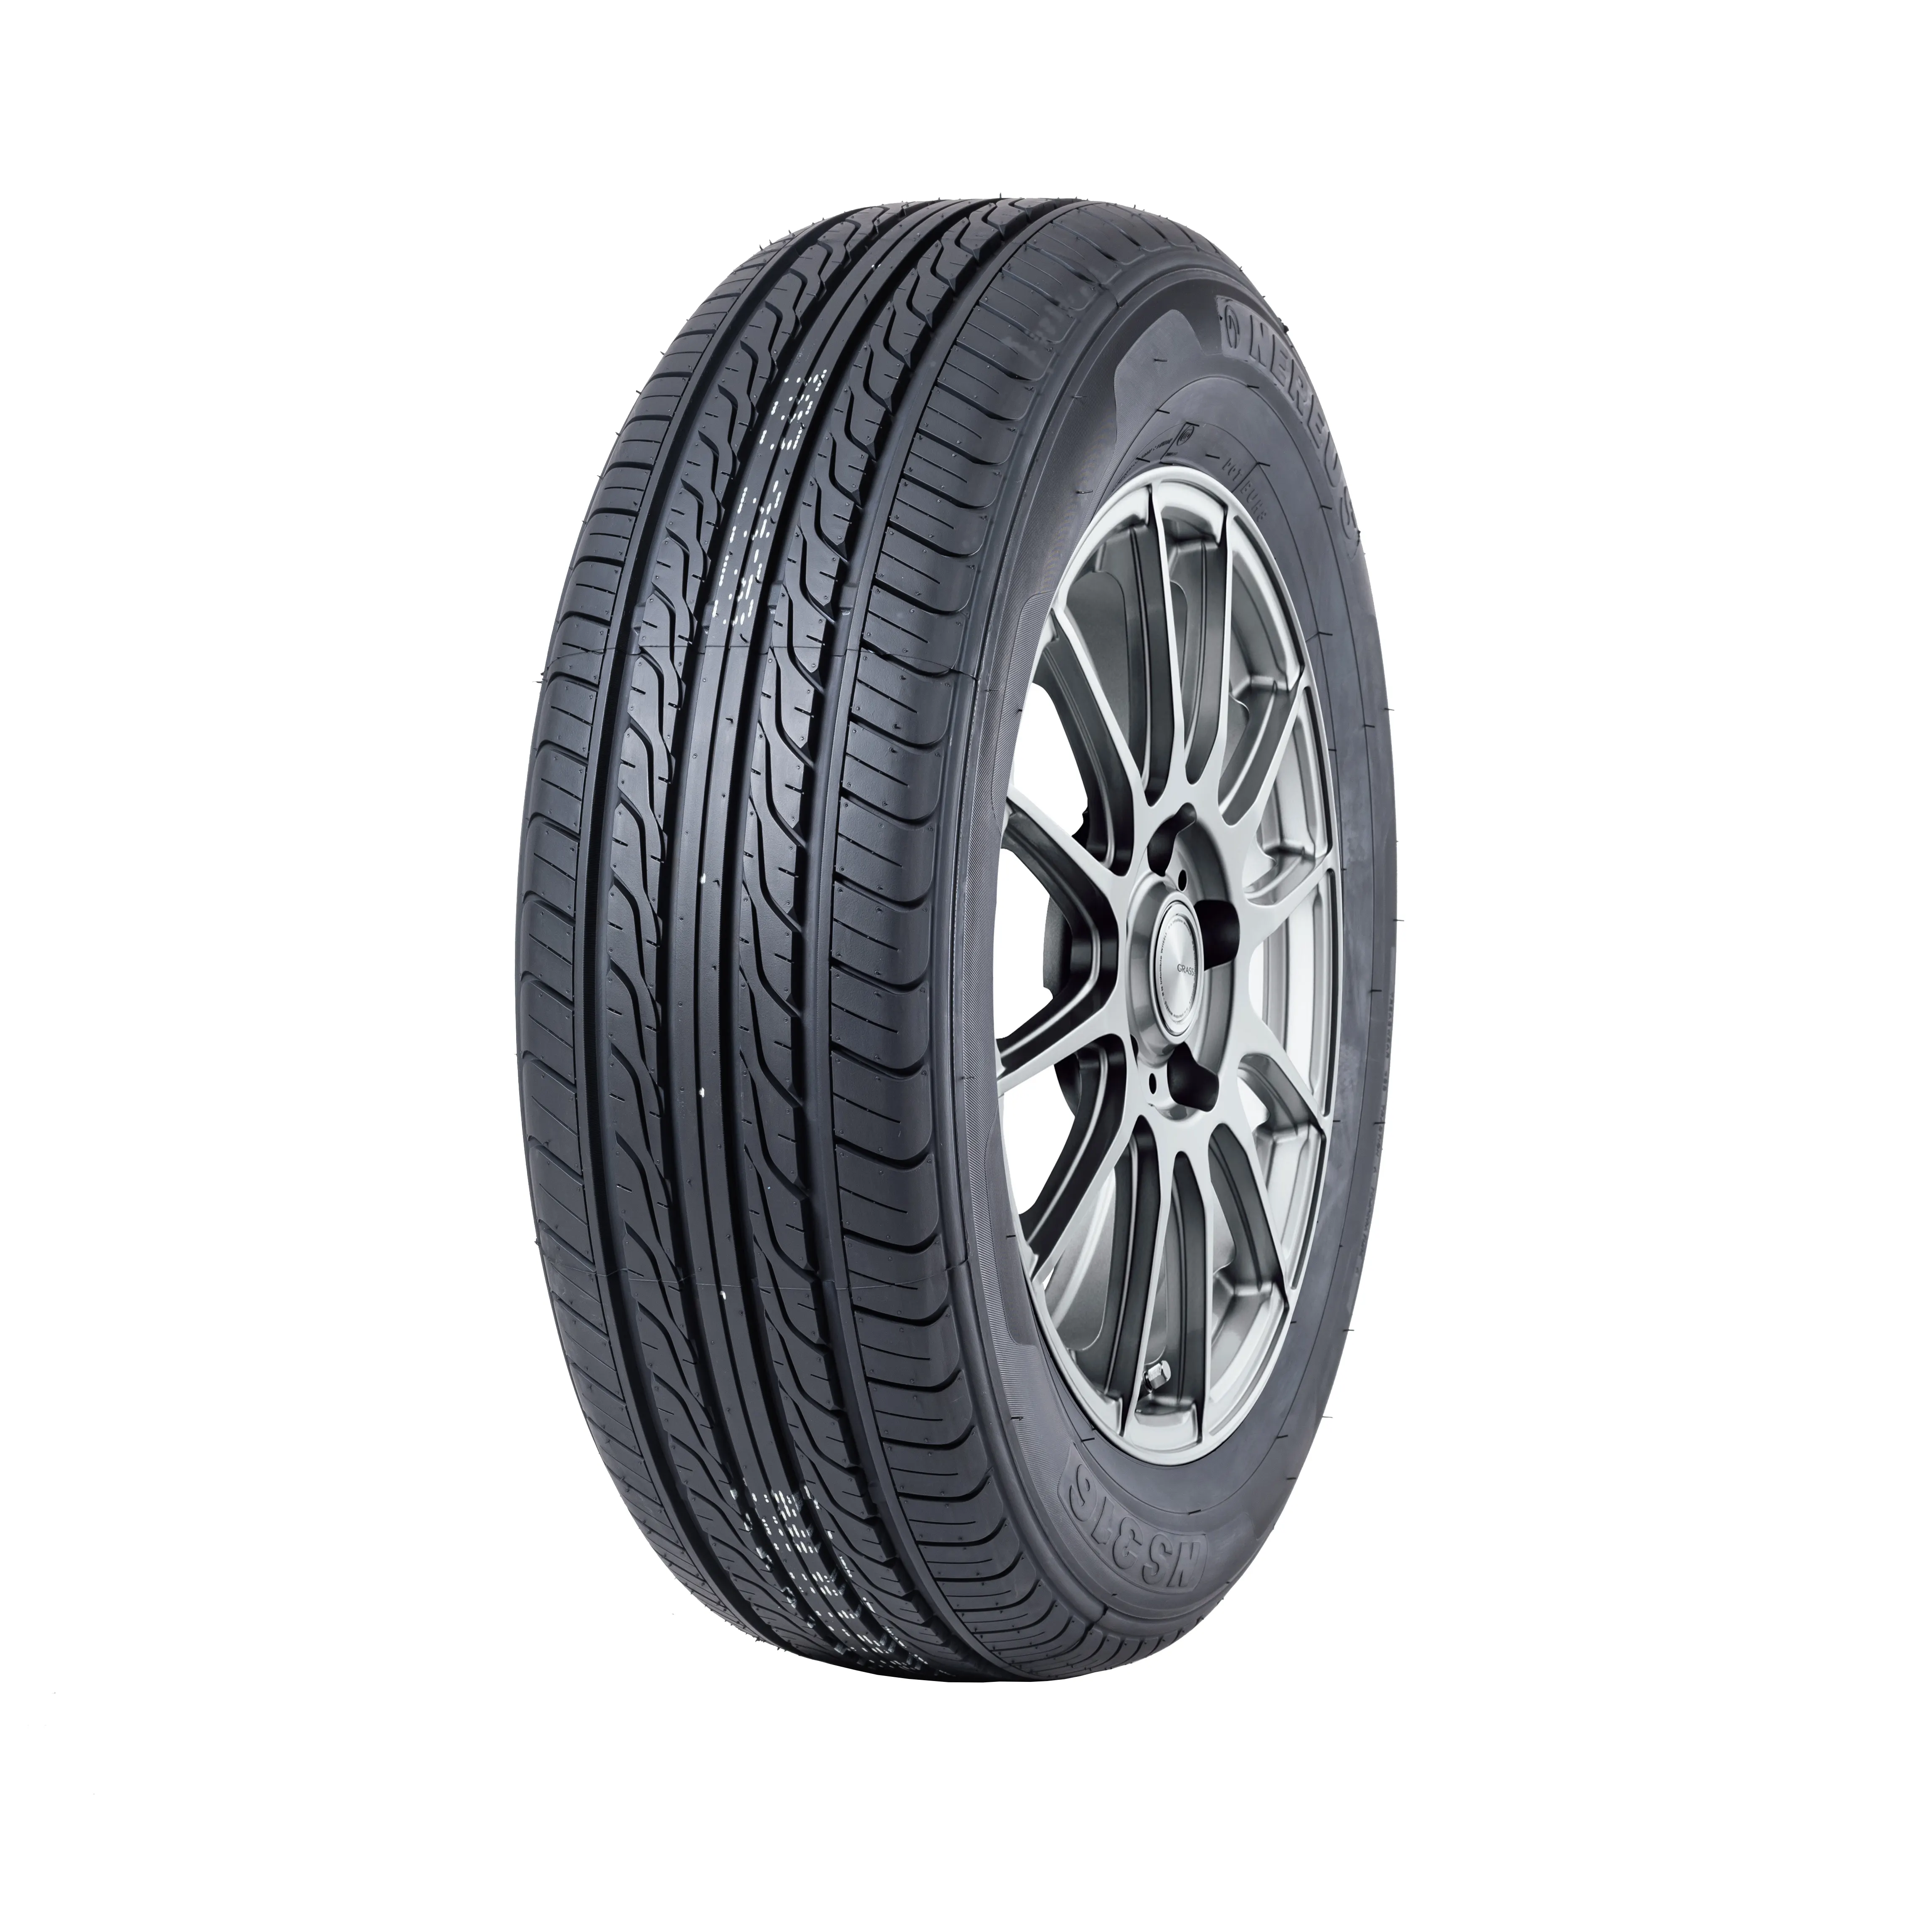 CHARMHOO 215/45 r17 215/60 r16 215/55 r17 225/40 r18 UHP pneumatici di alta qualità NEREUS tre-un pneumatici per auto per l'Europa